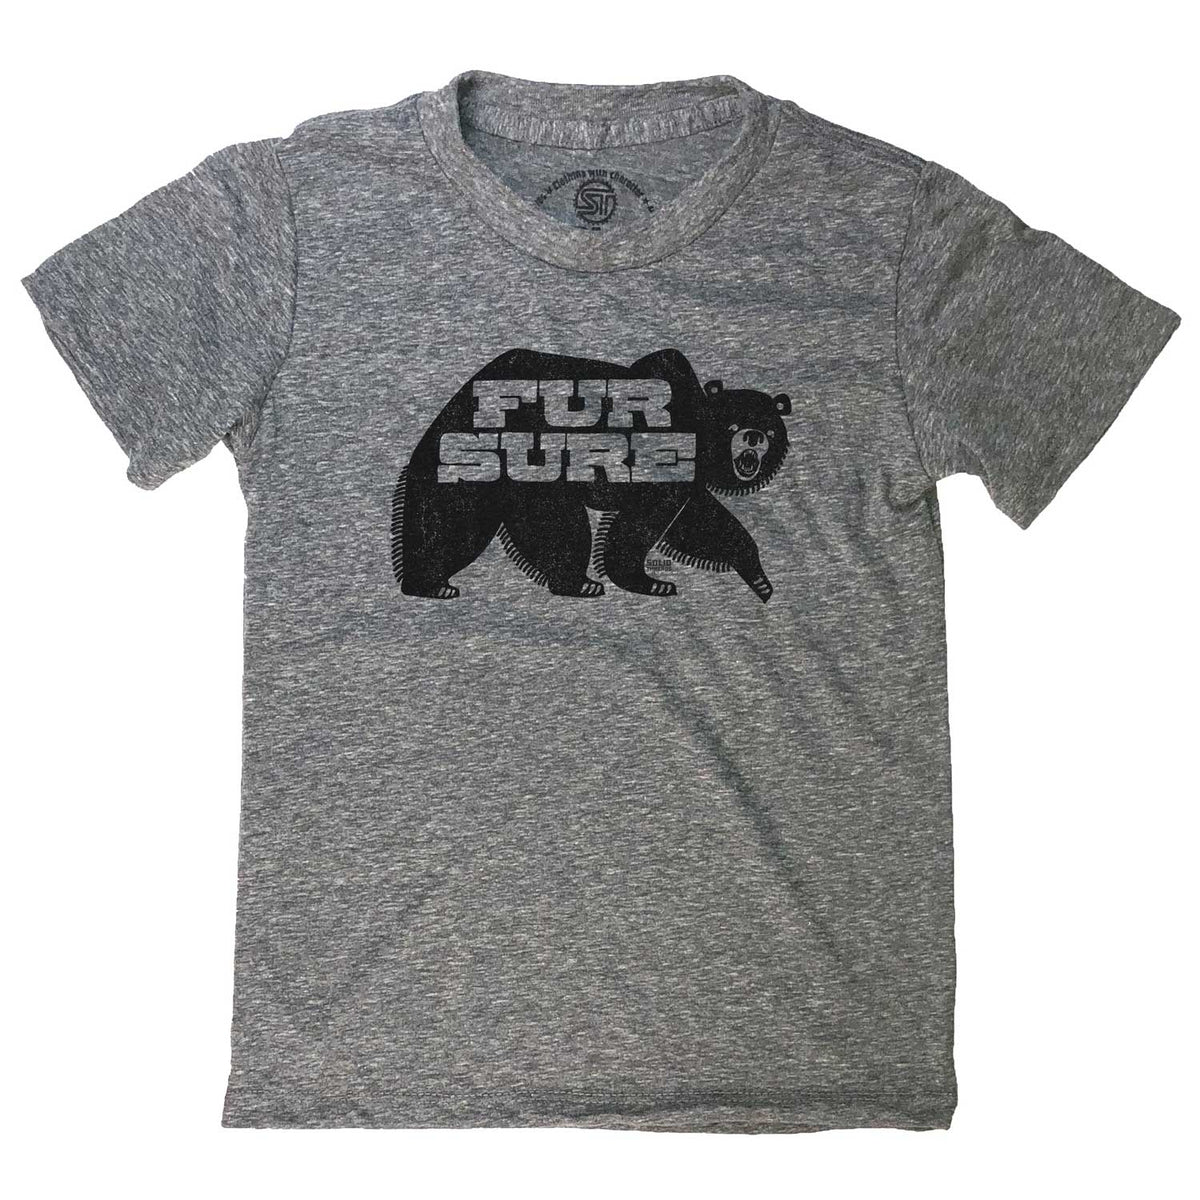 Kids Fur Sure Retro Bear Cub Graphic T-Shirt | Cute Funny Animal Lover Tee | Solid Threads